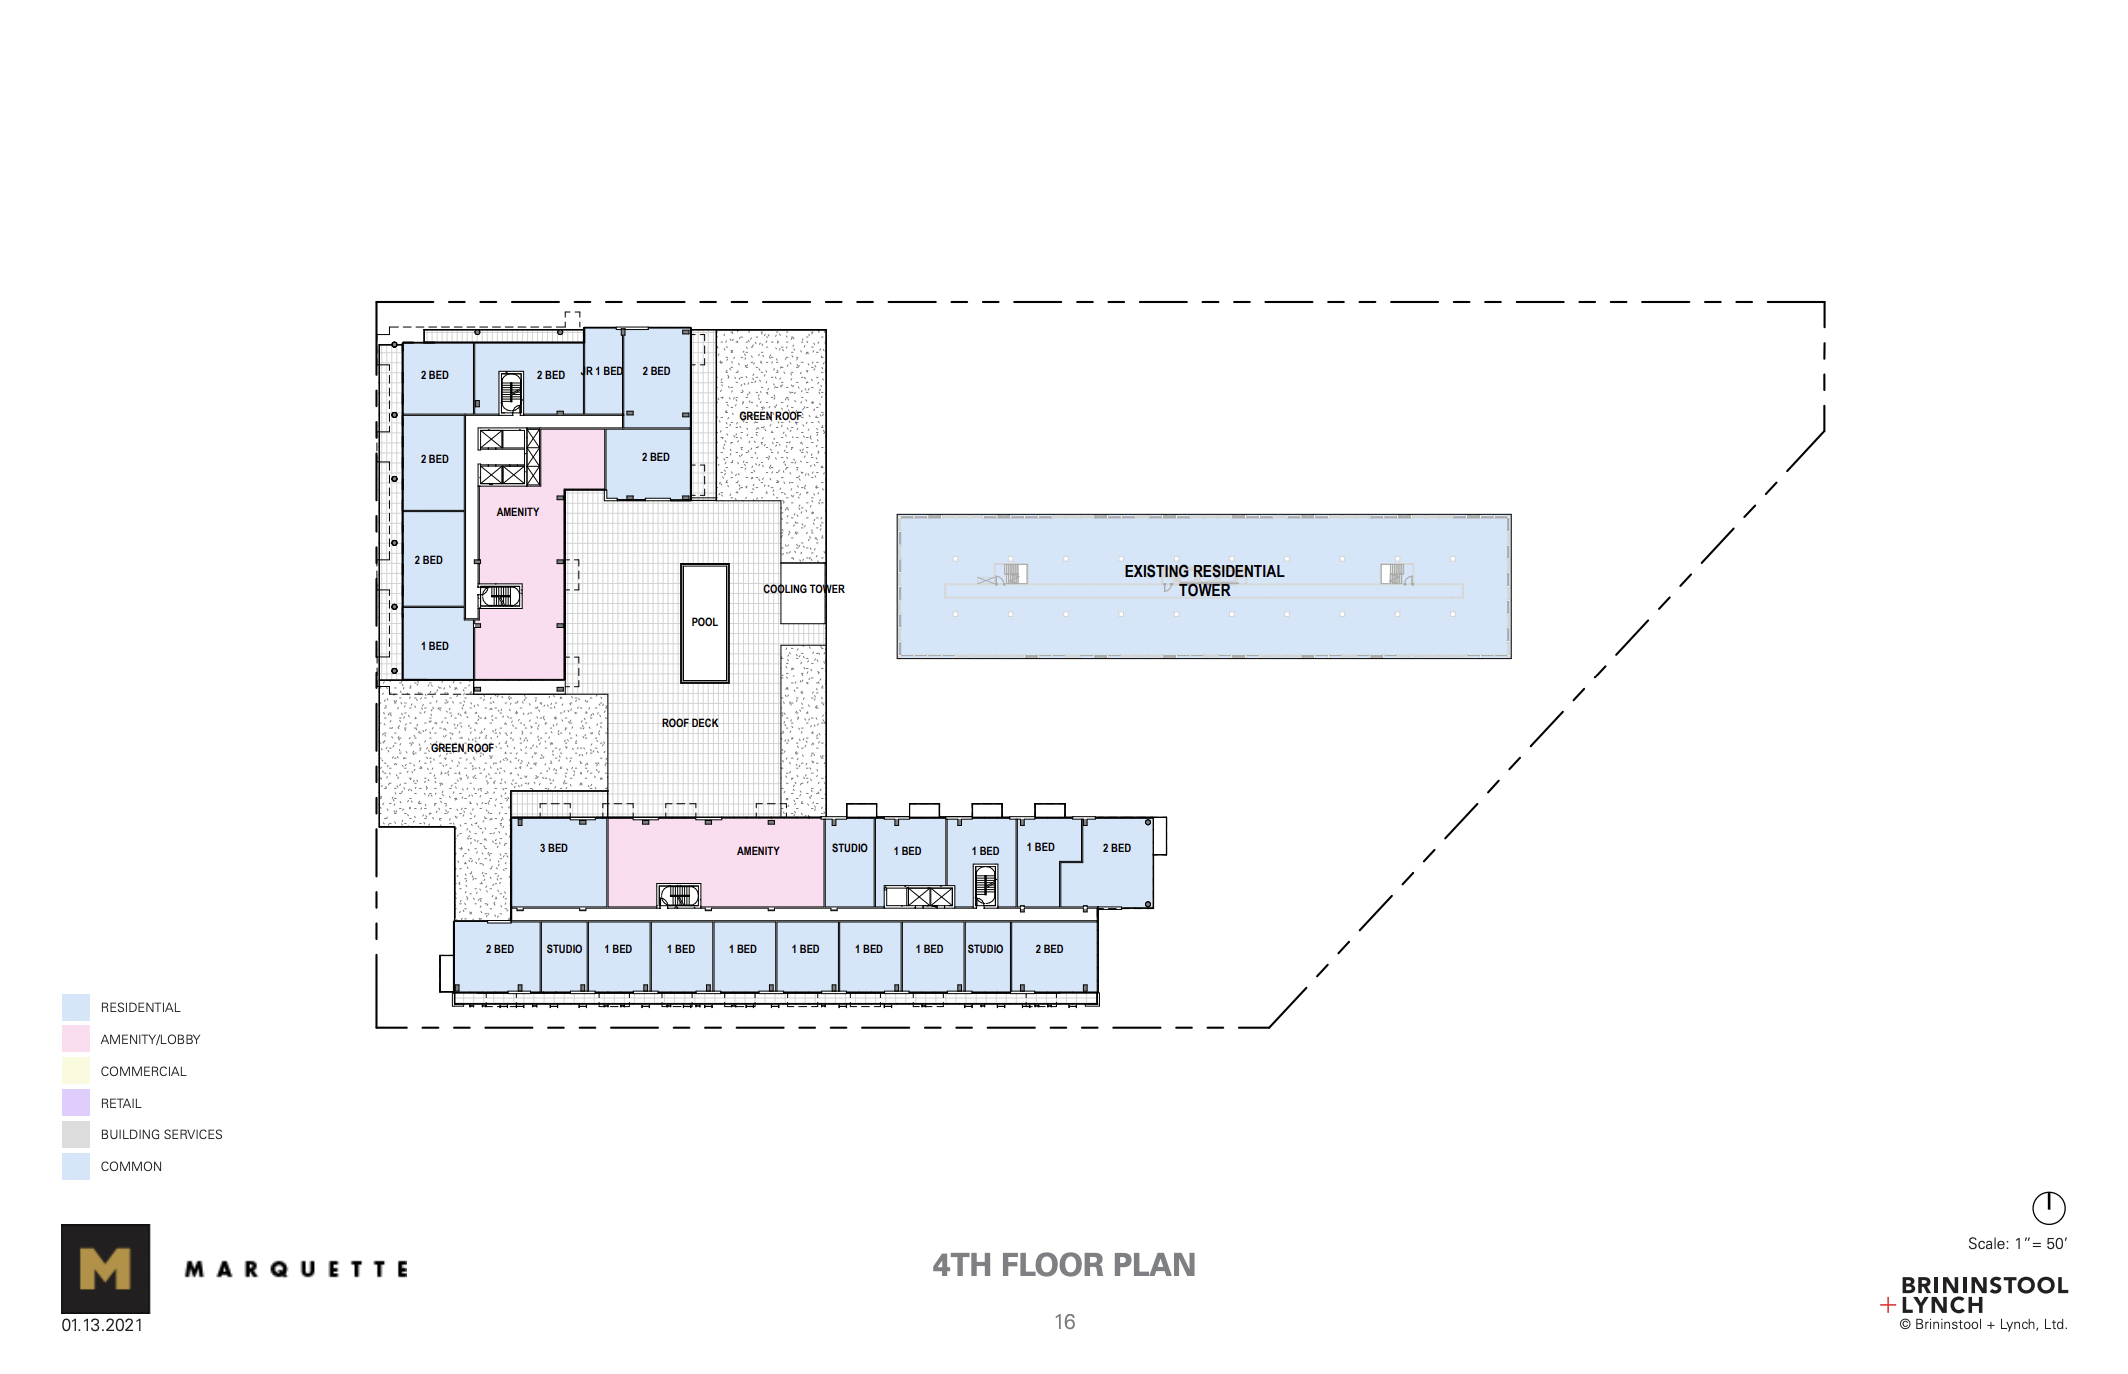 Fourth floor in masterplan (513 S Damen Avenue in upper left)